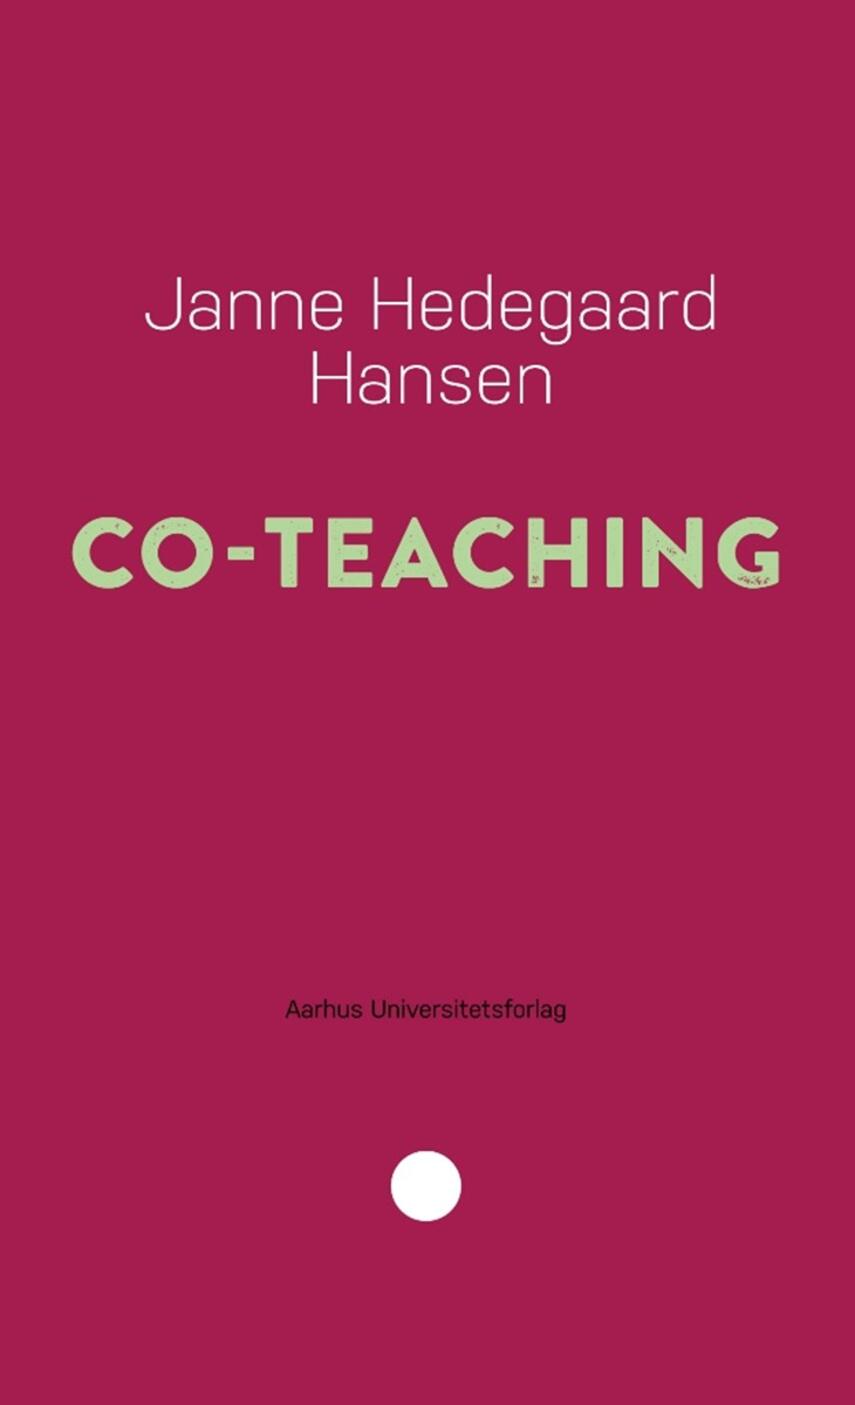 Janne Hedegaard Hansen: Co-teaching